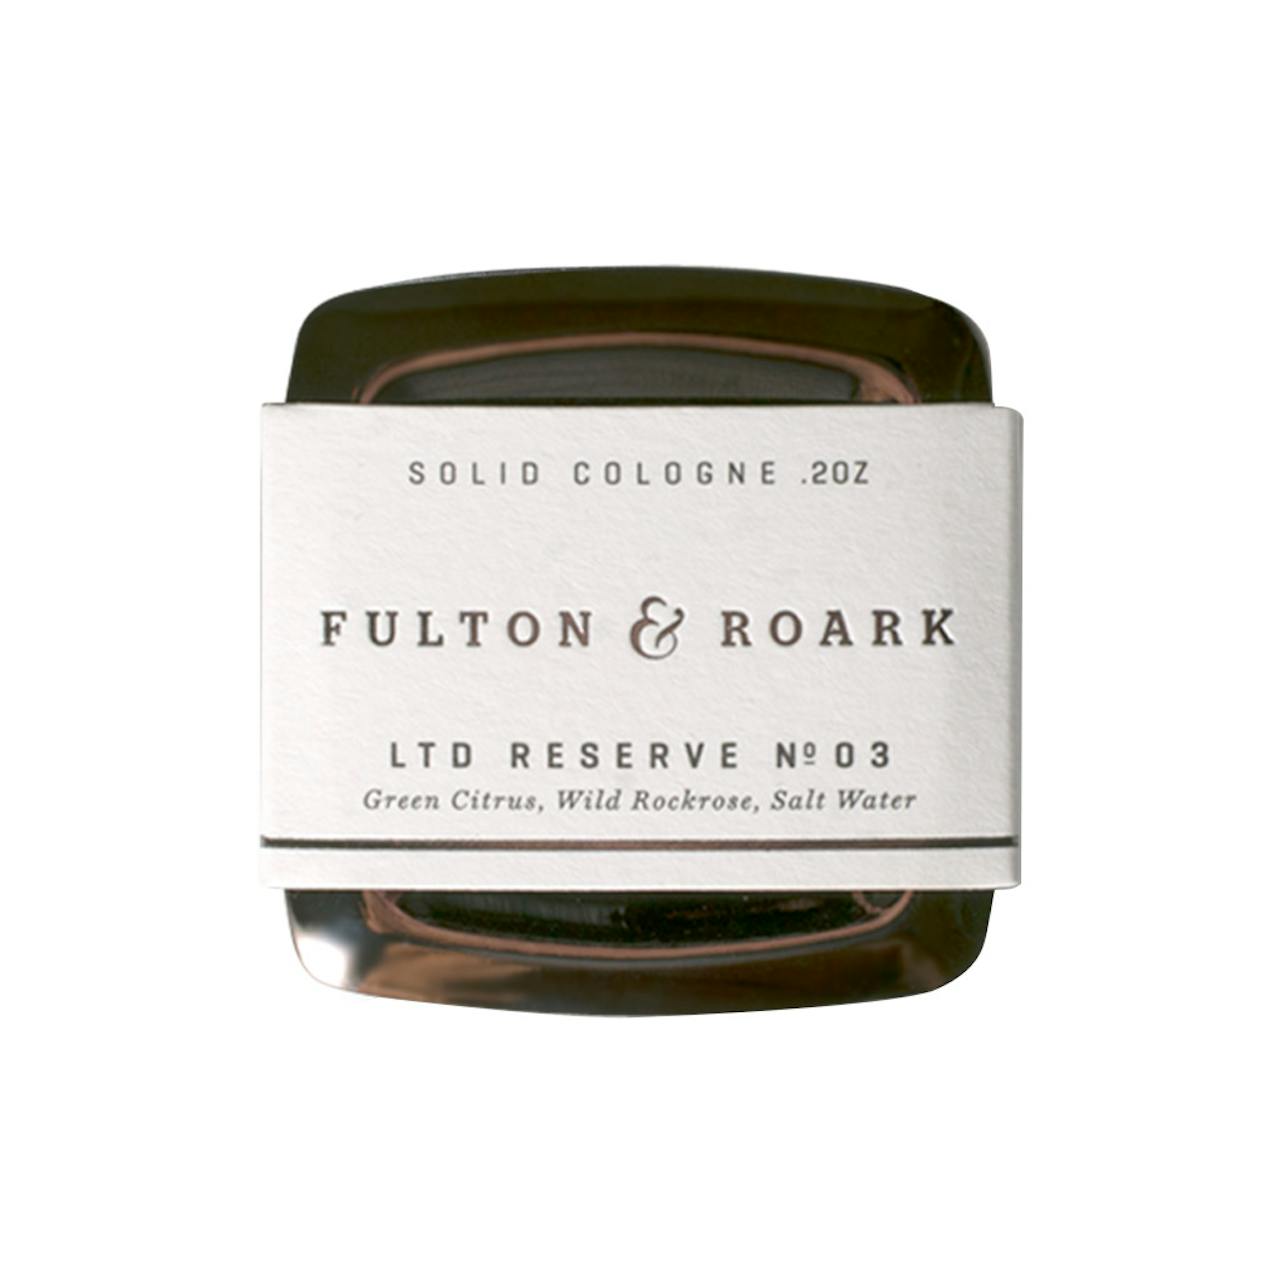 Fulton & Roark LTD Reserve Solid Cologne